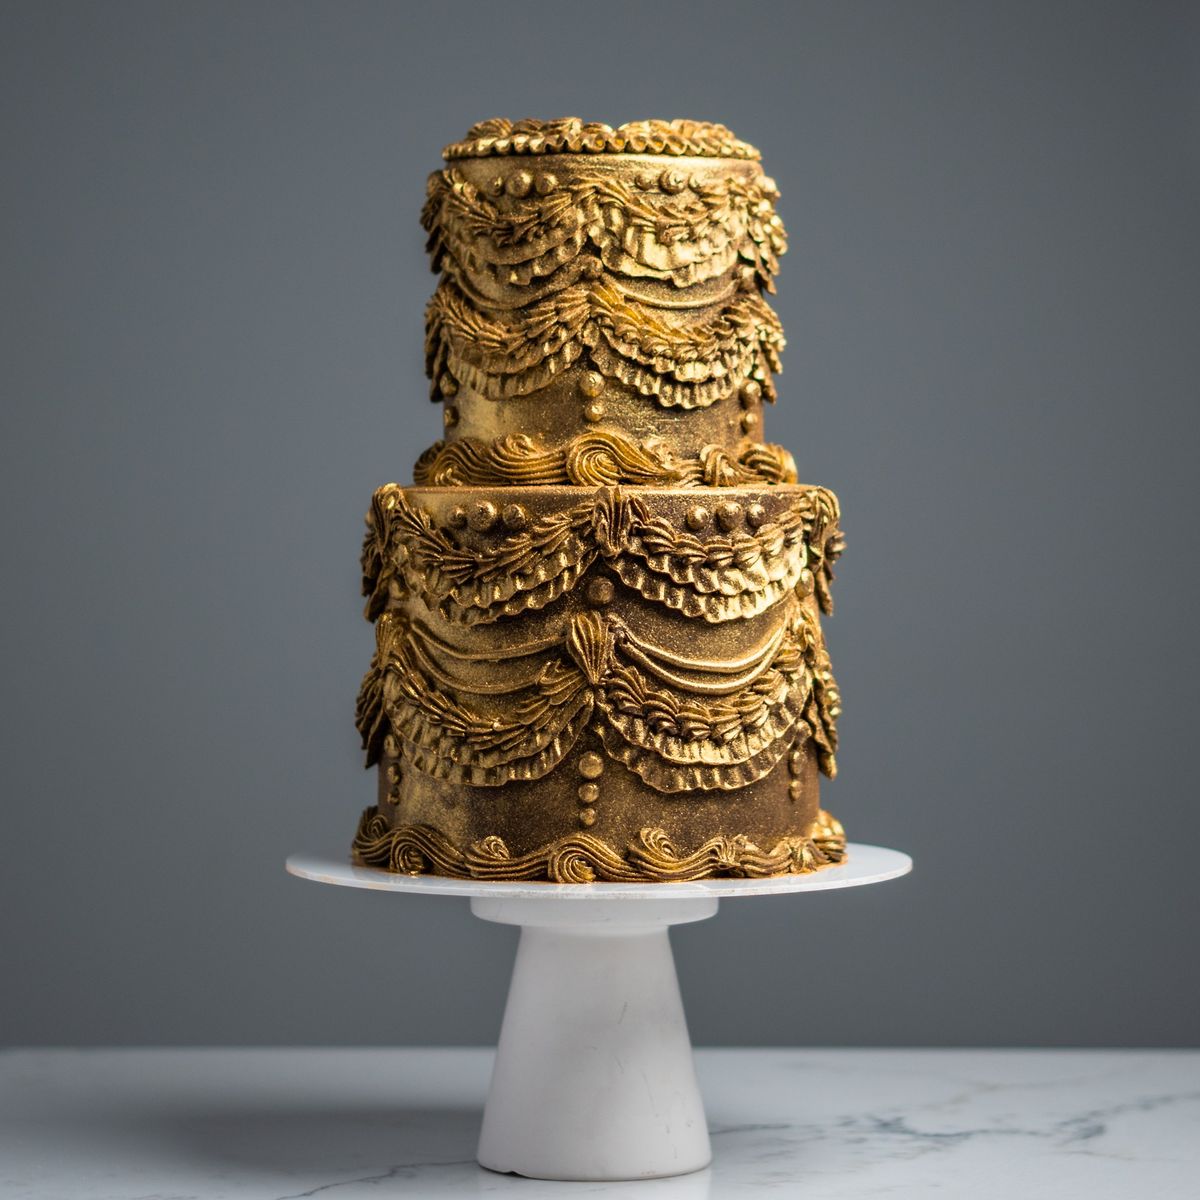 Two Tier Golden Victorian Cake Workshop